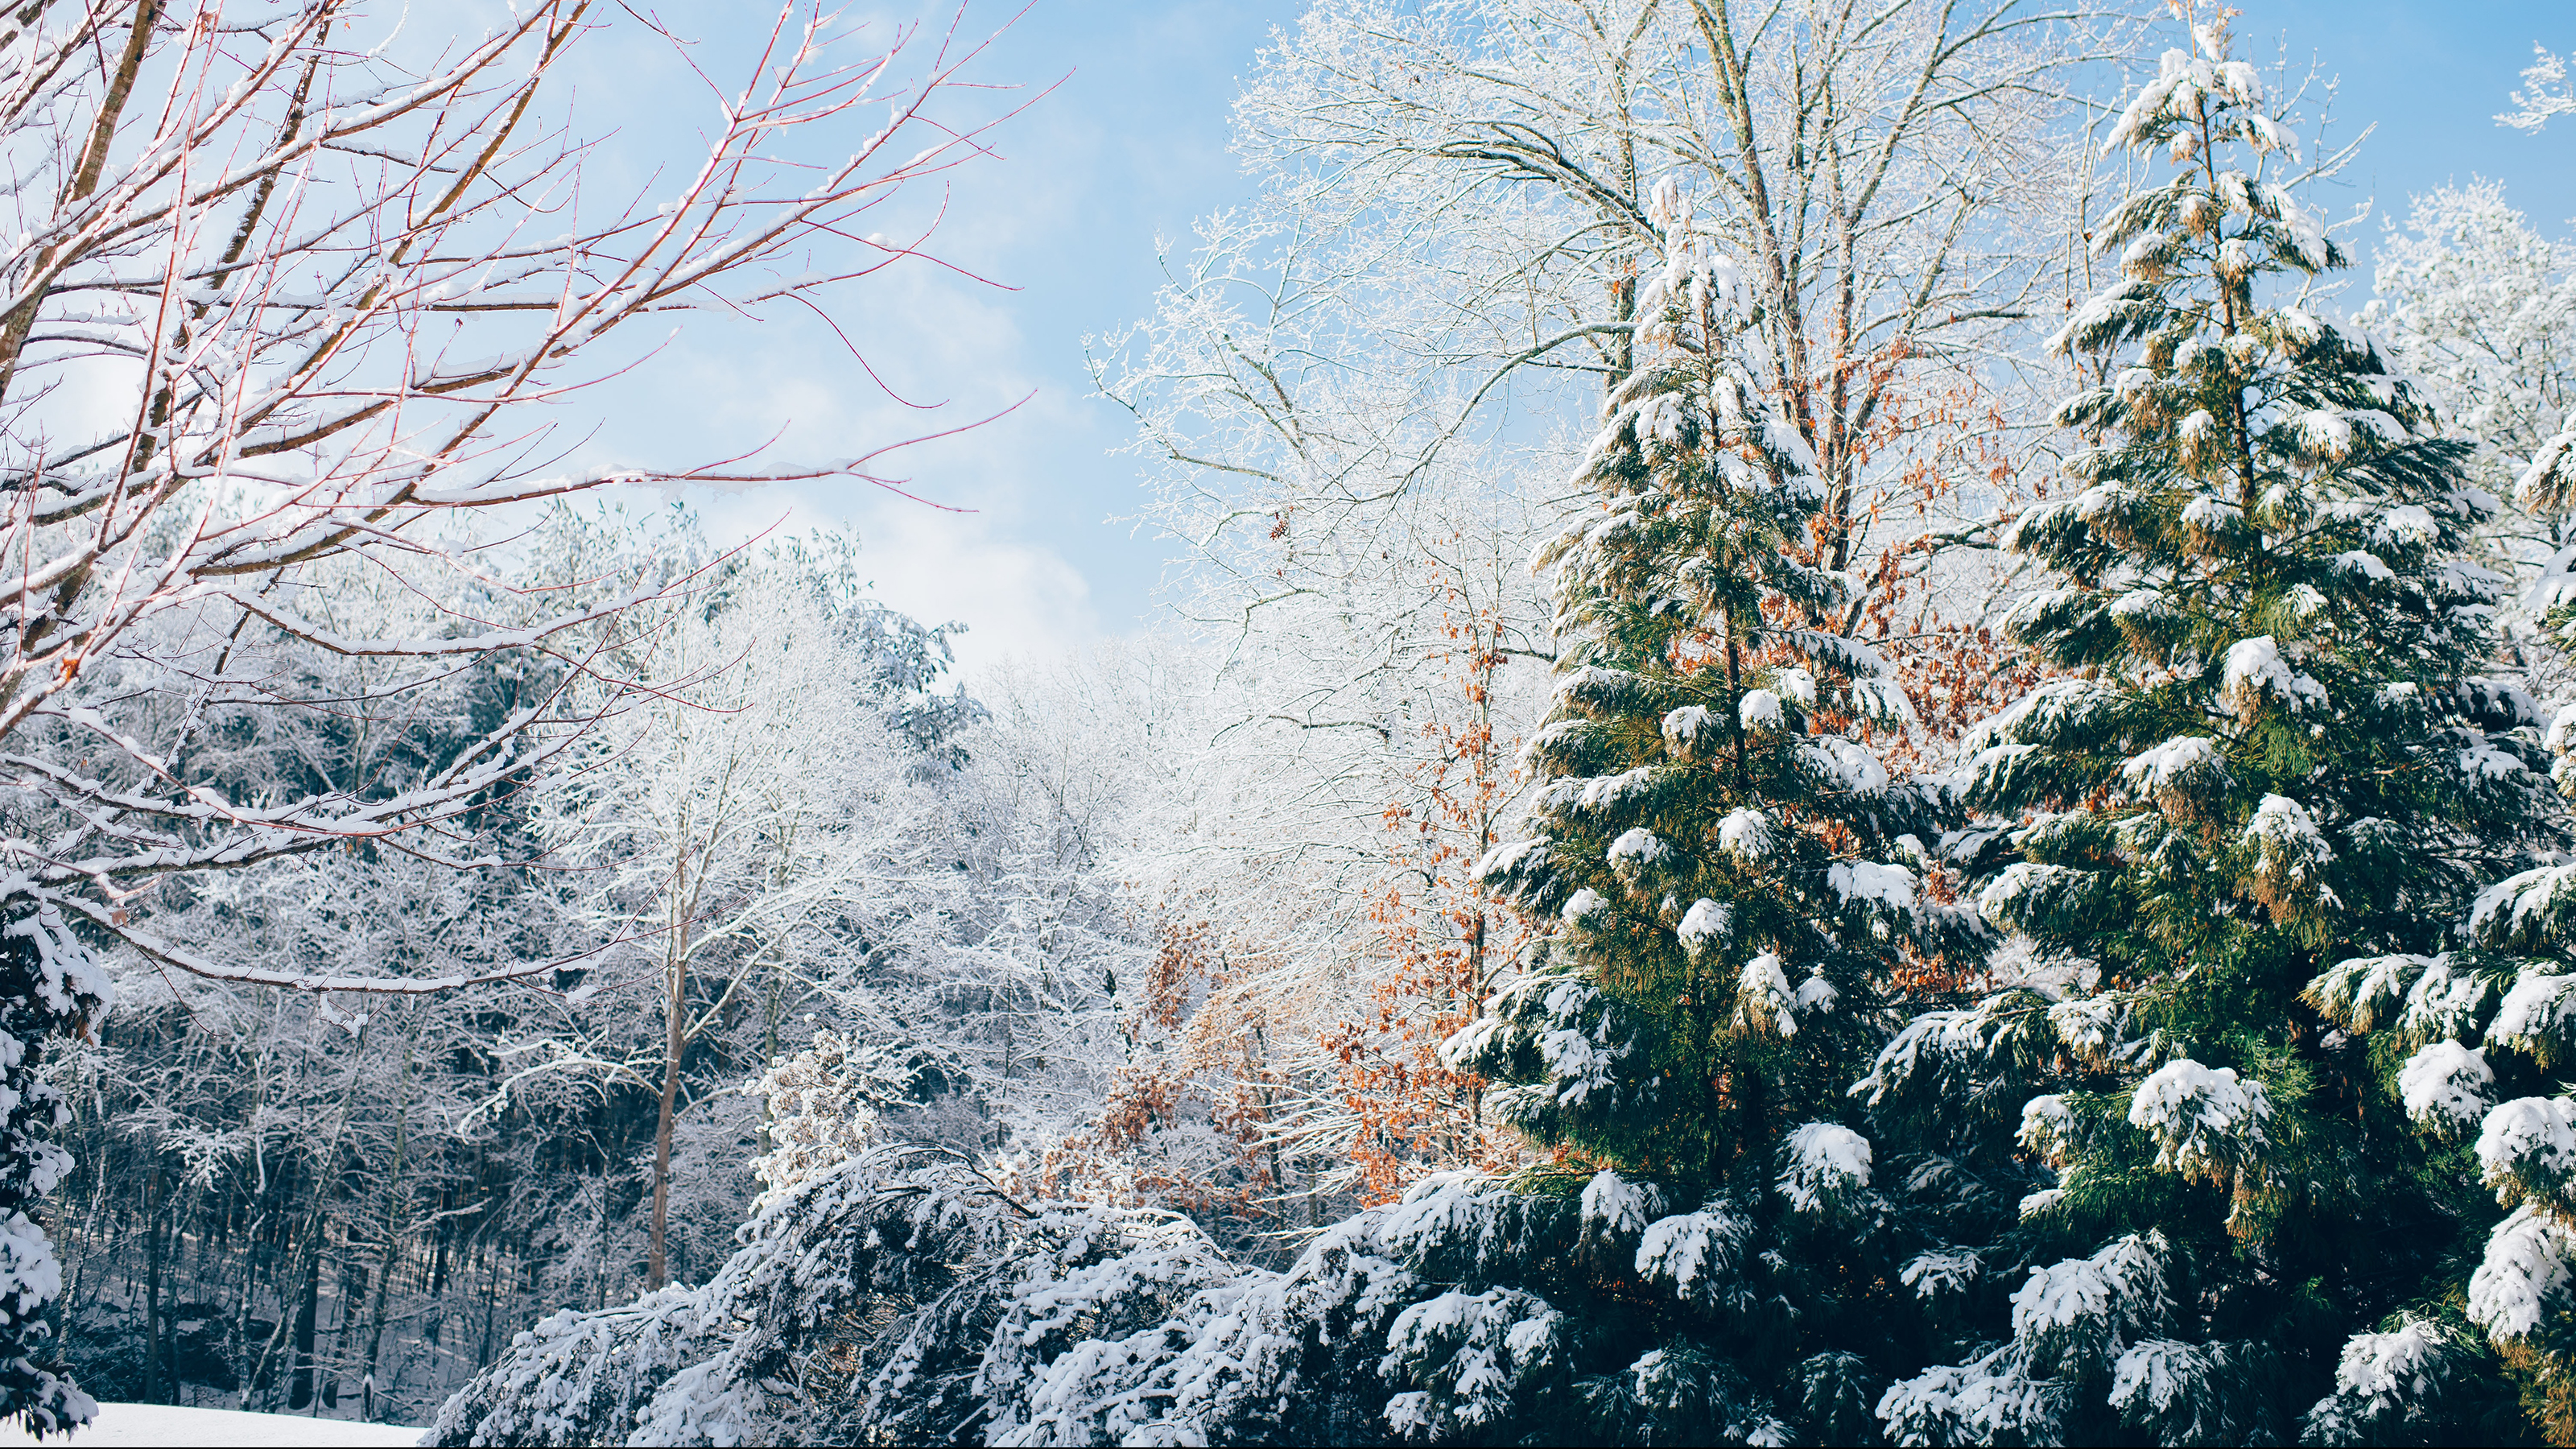 Snow falls on trees in a winter scene